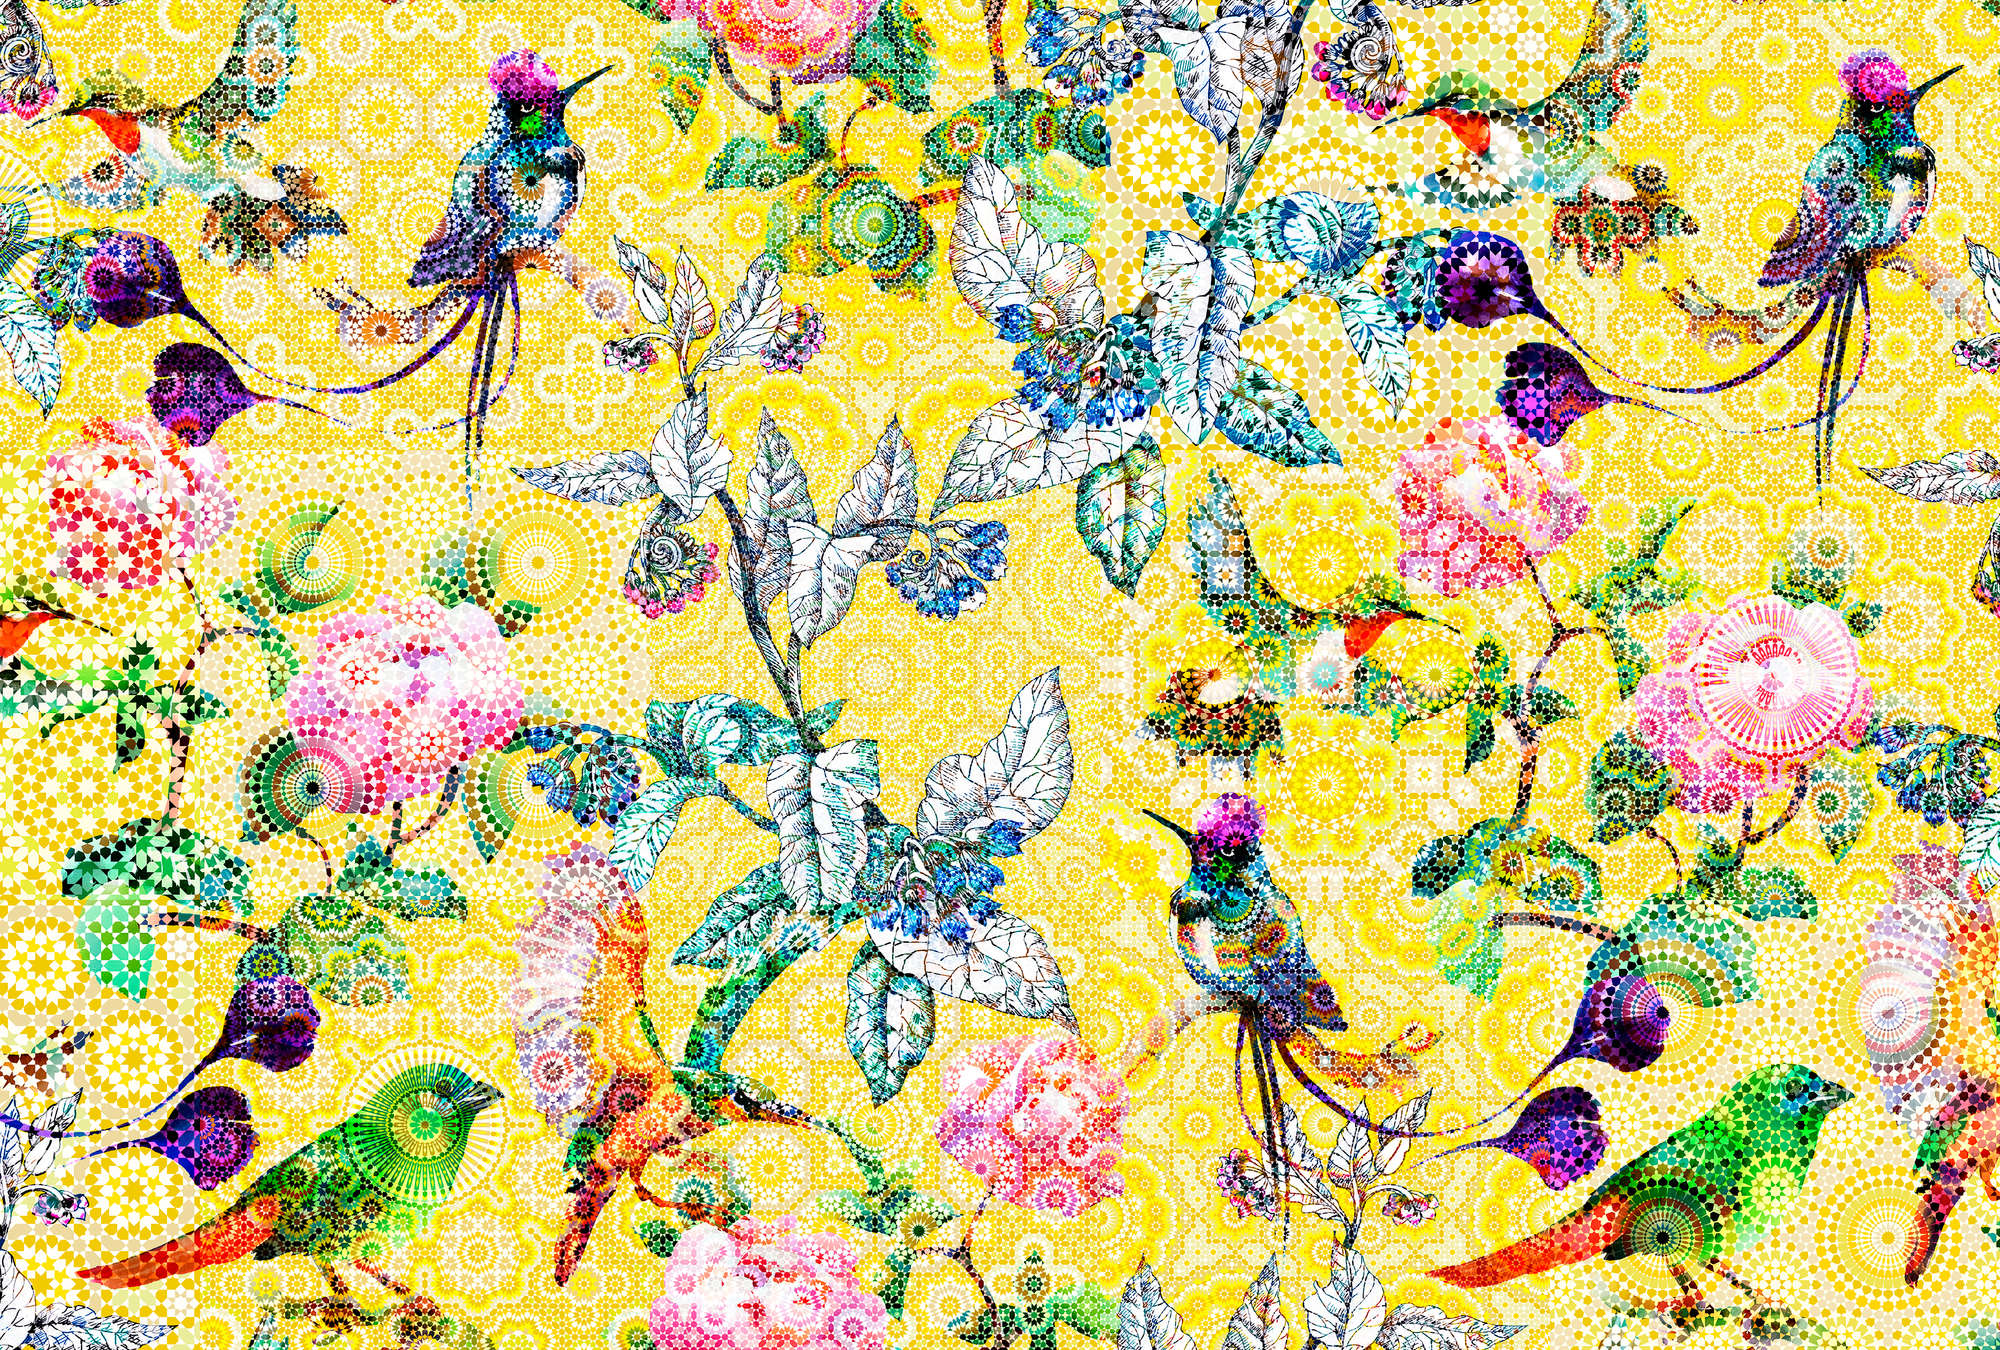             Photo wallpaper exotic flowers mosaic - yellow, green
        